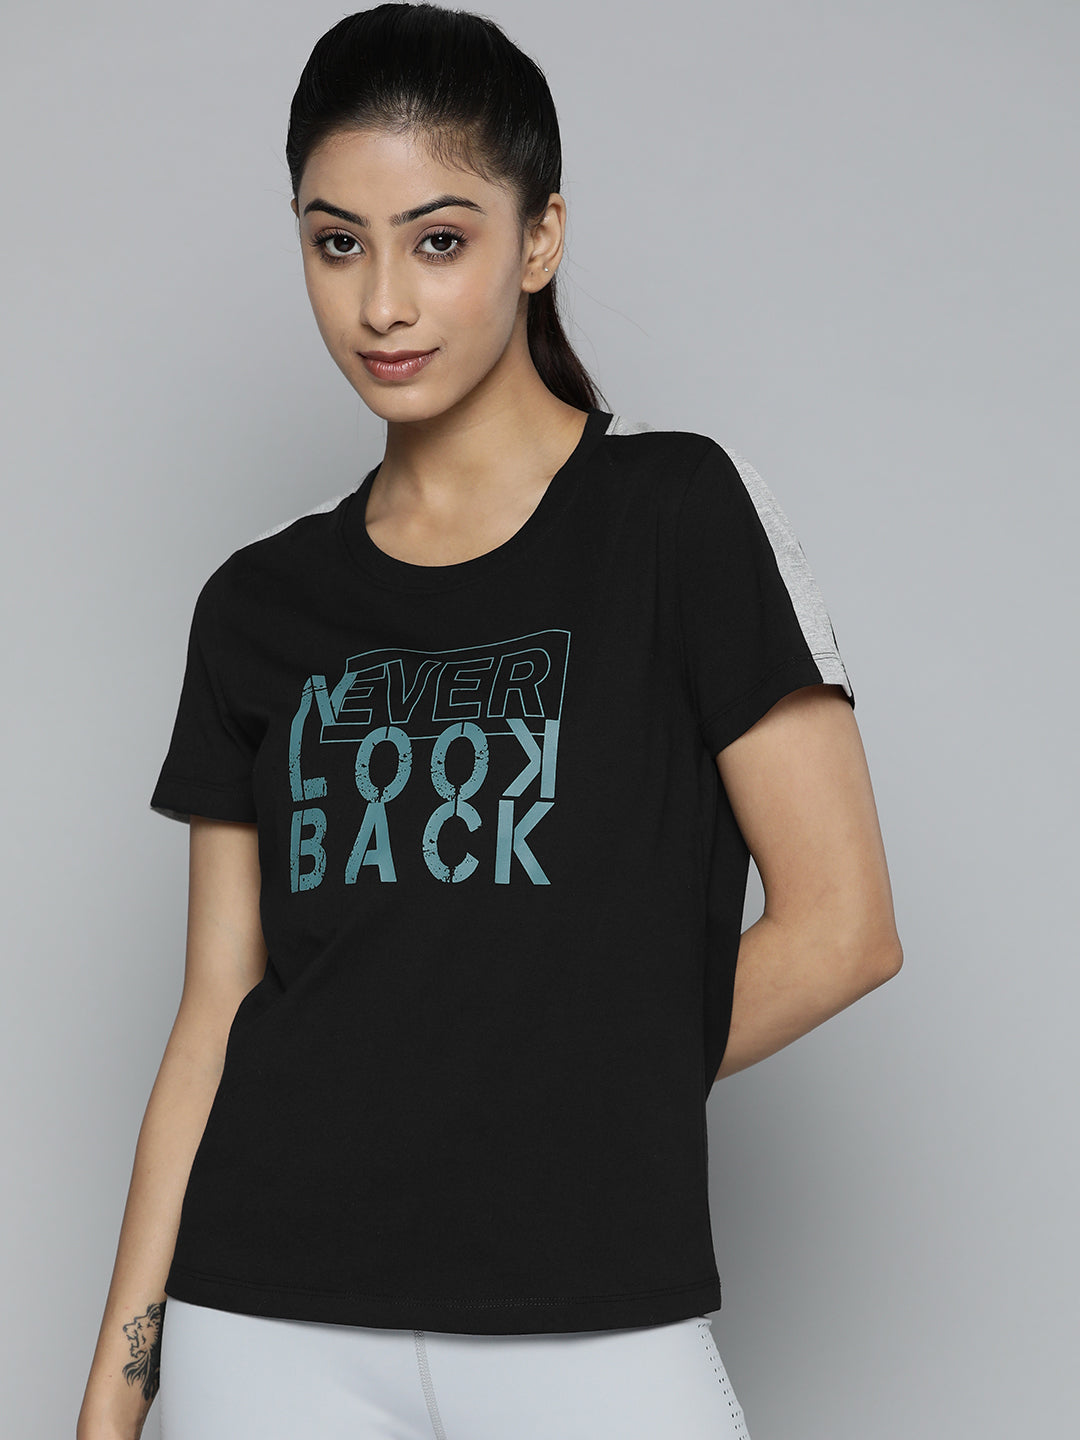 Women Black & Blue Typography Printed Slim Fit Training or Gym T-shirt